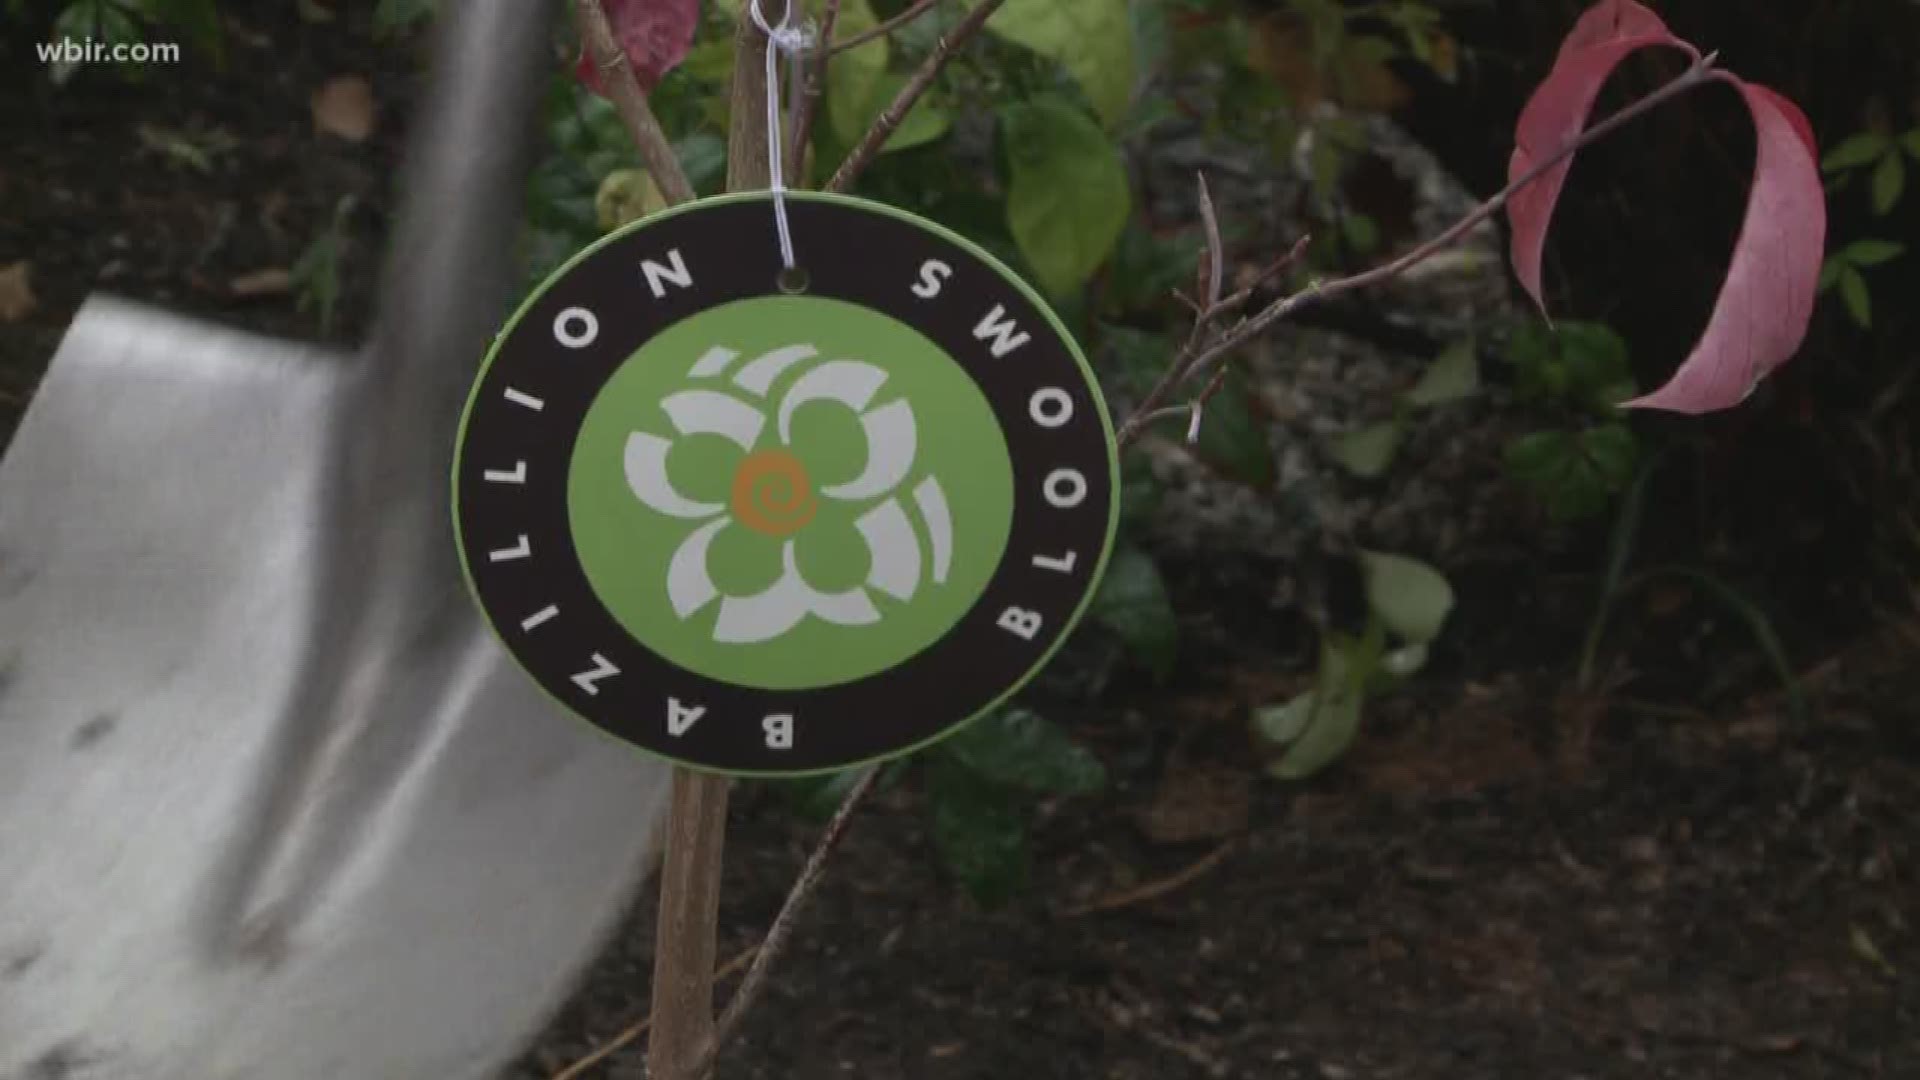 Dogwood Arts celebrates planting 10,000 trees in 10 years.